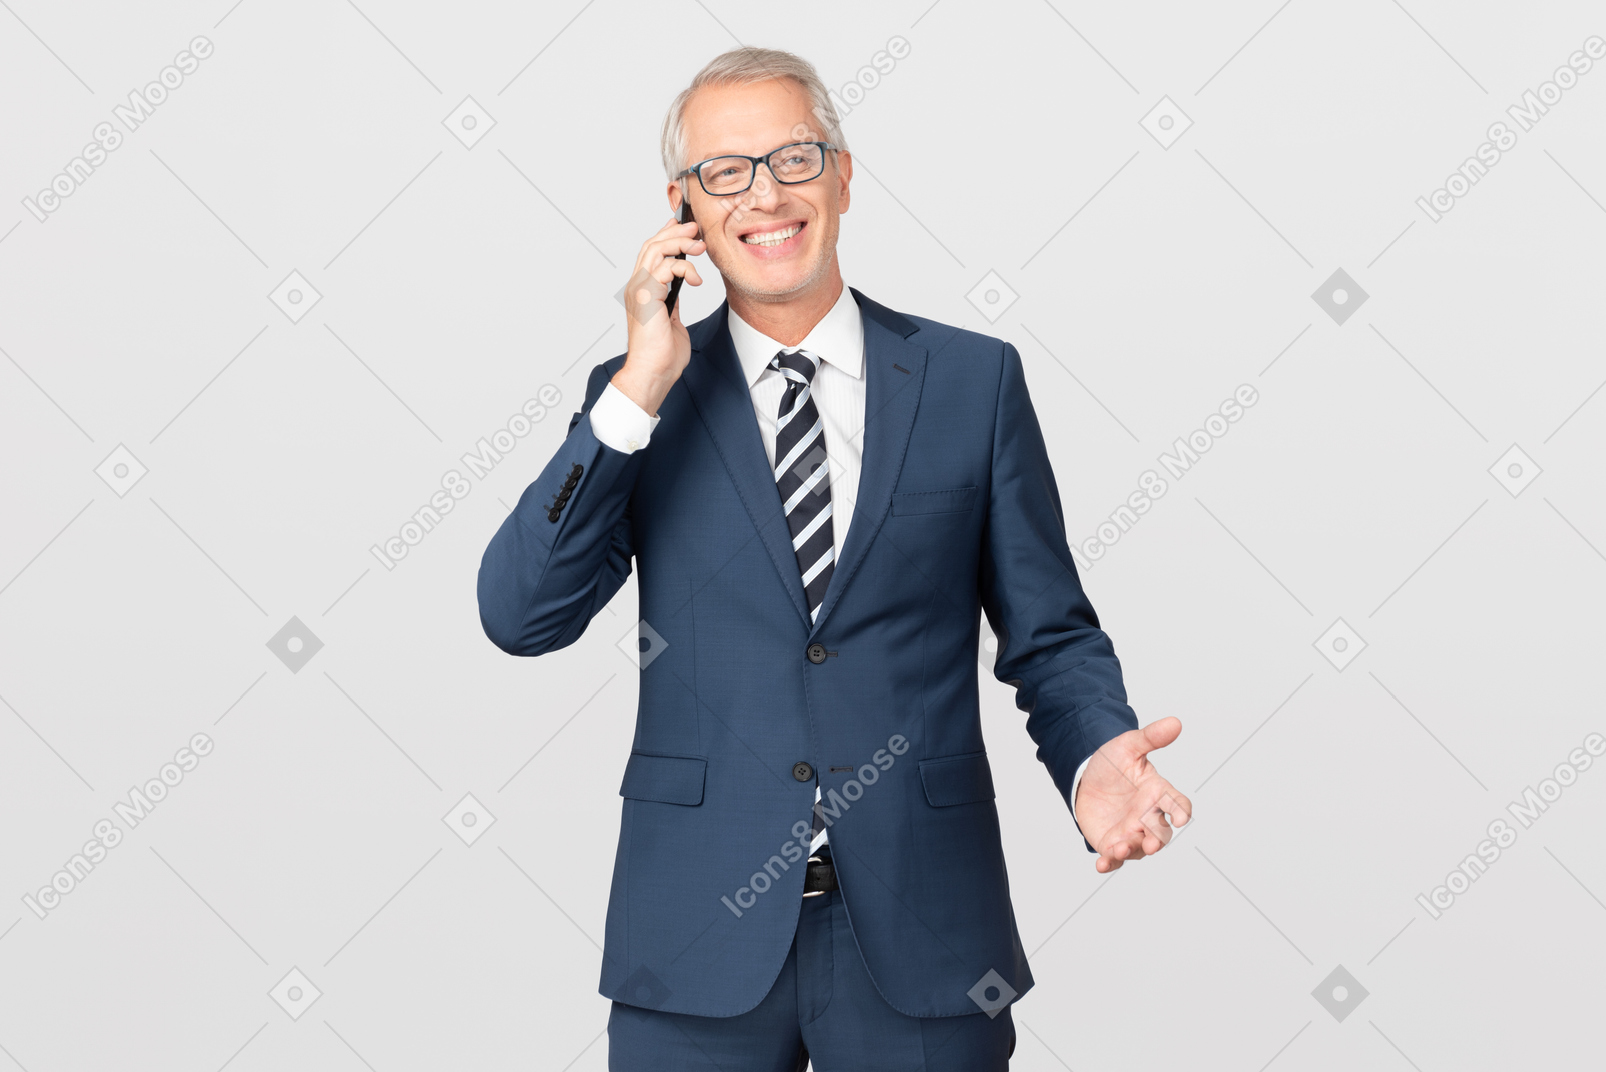 Elegant middle-aged man talking on the phone